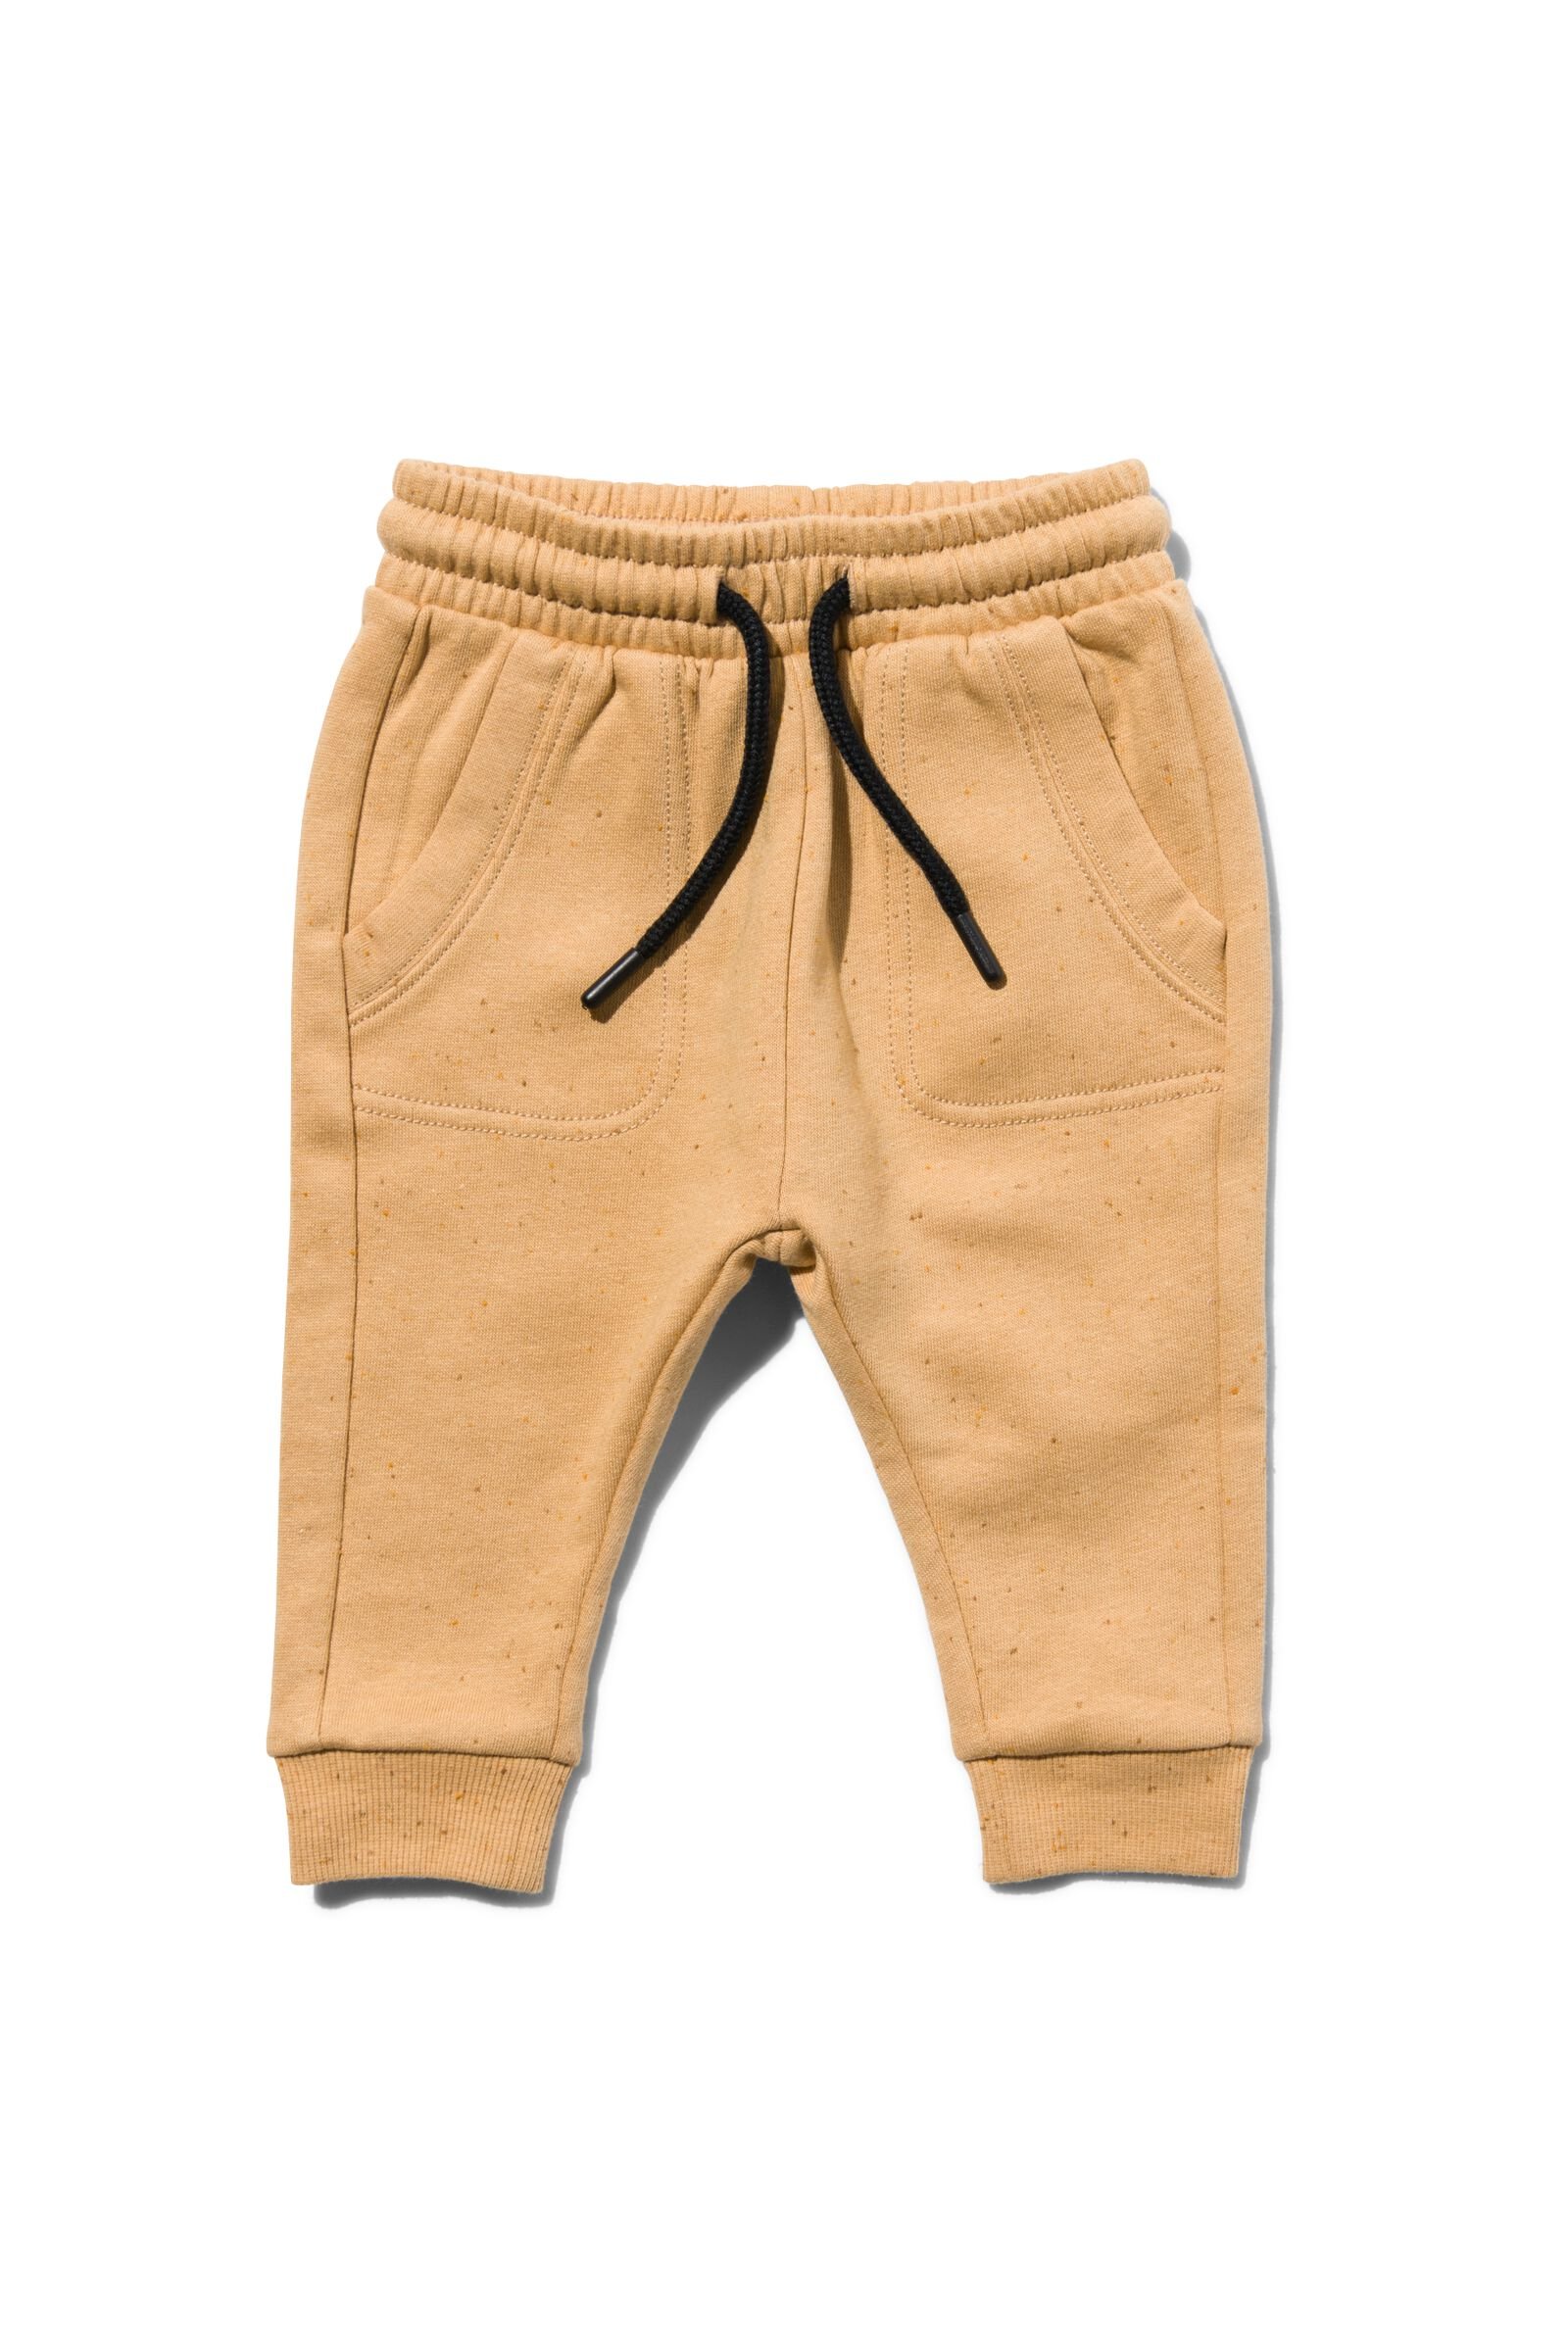 pantalon sweat bébé nappy sable 80 - 33166544 - HEMA